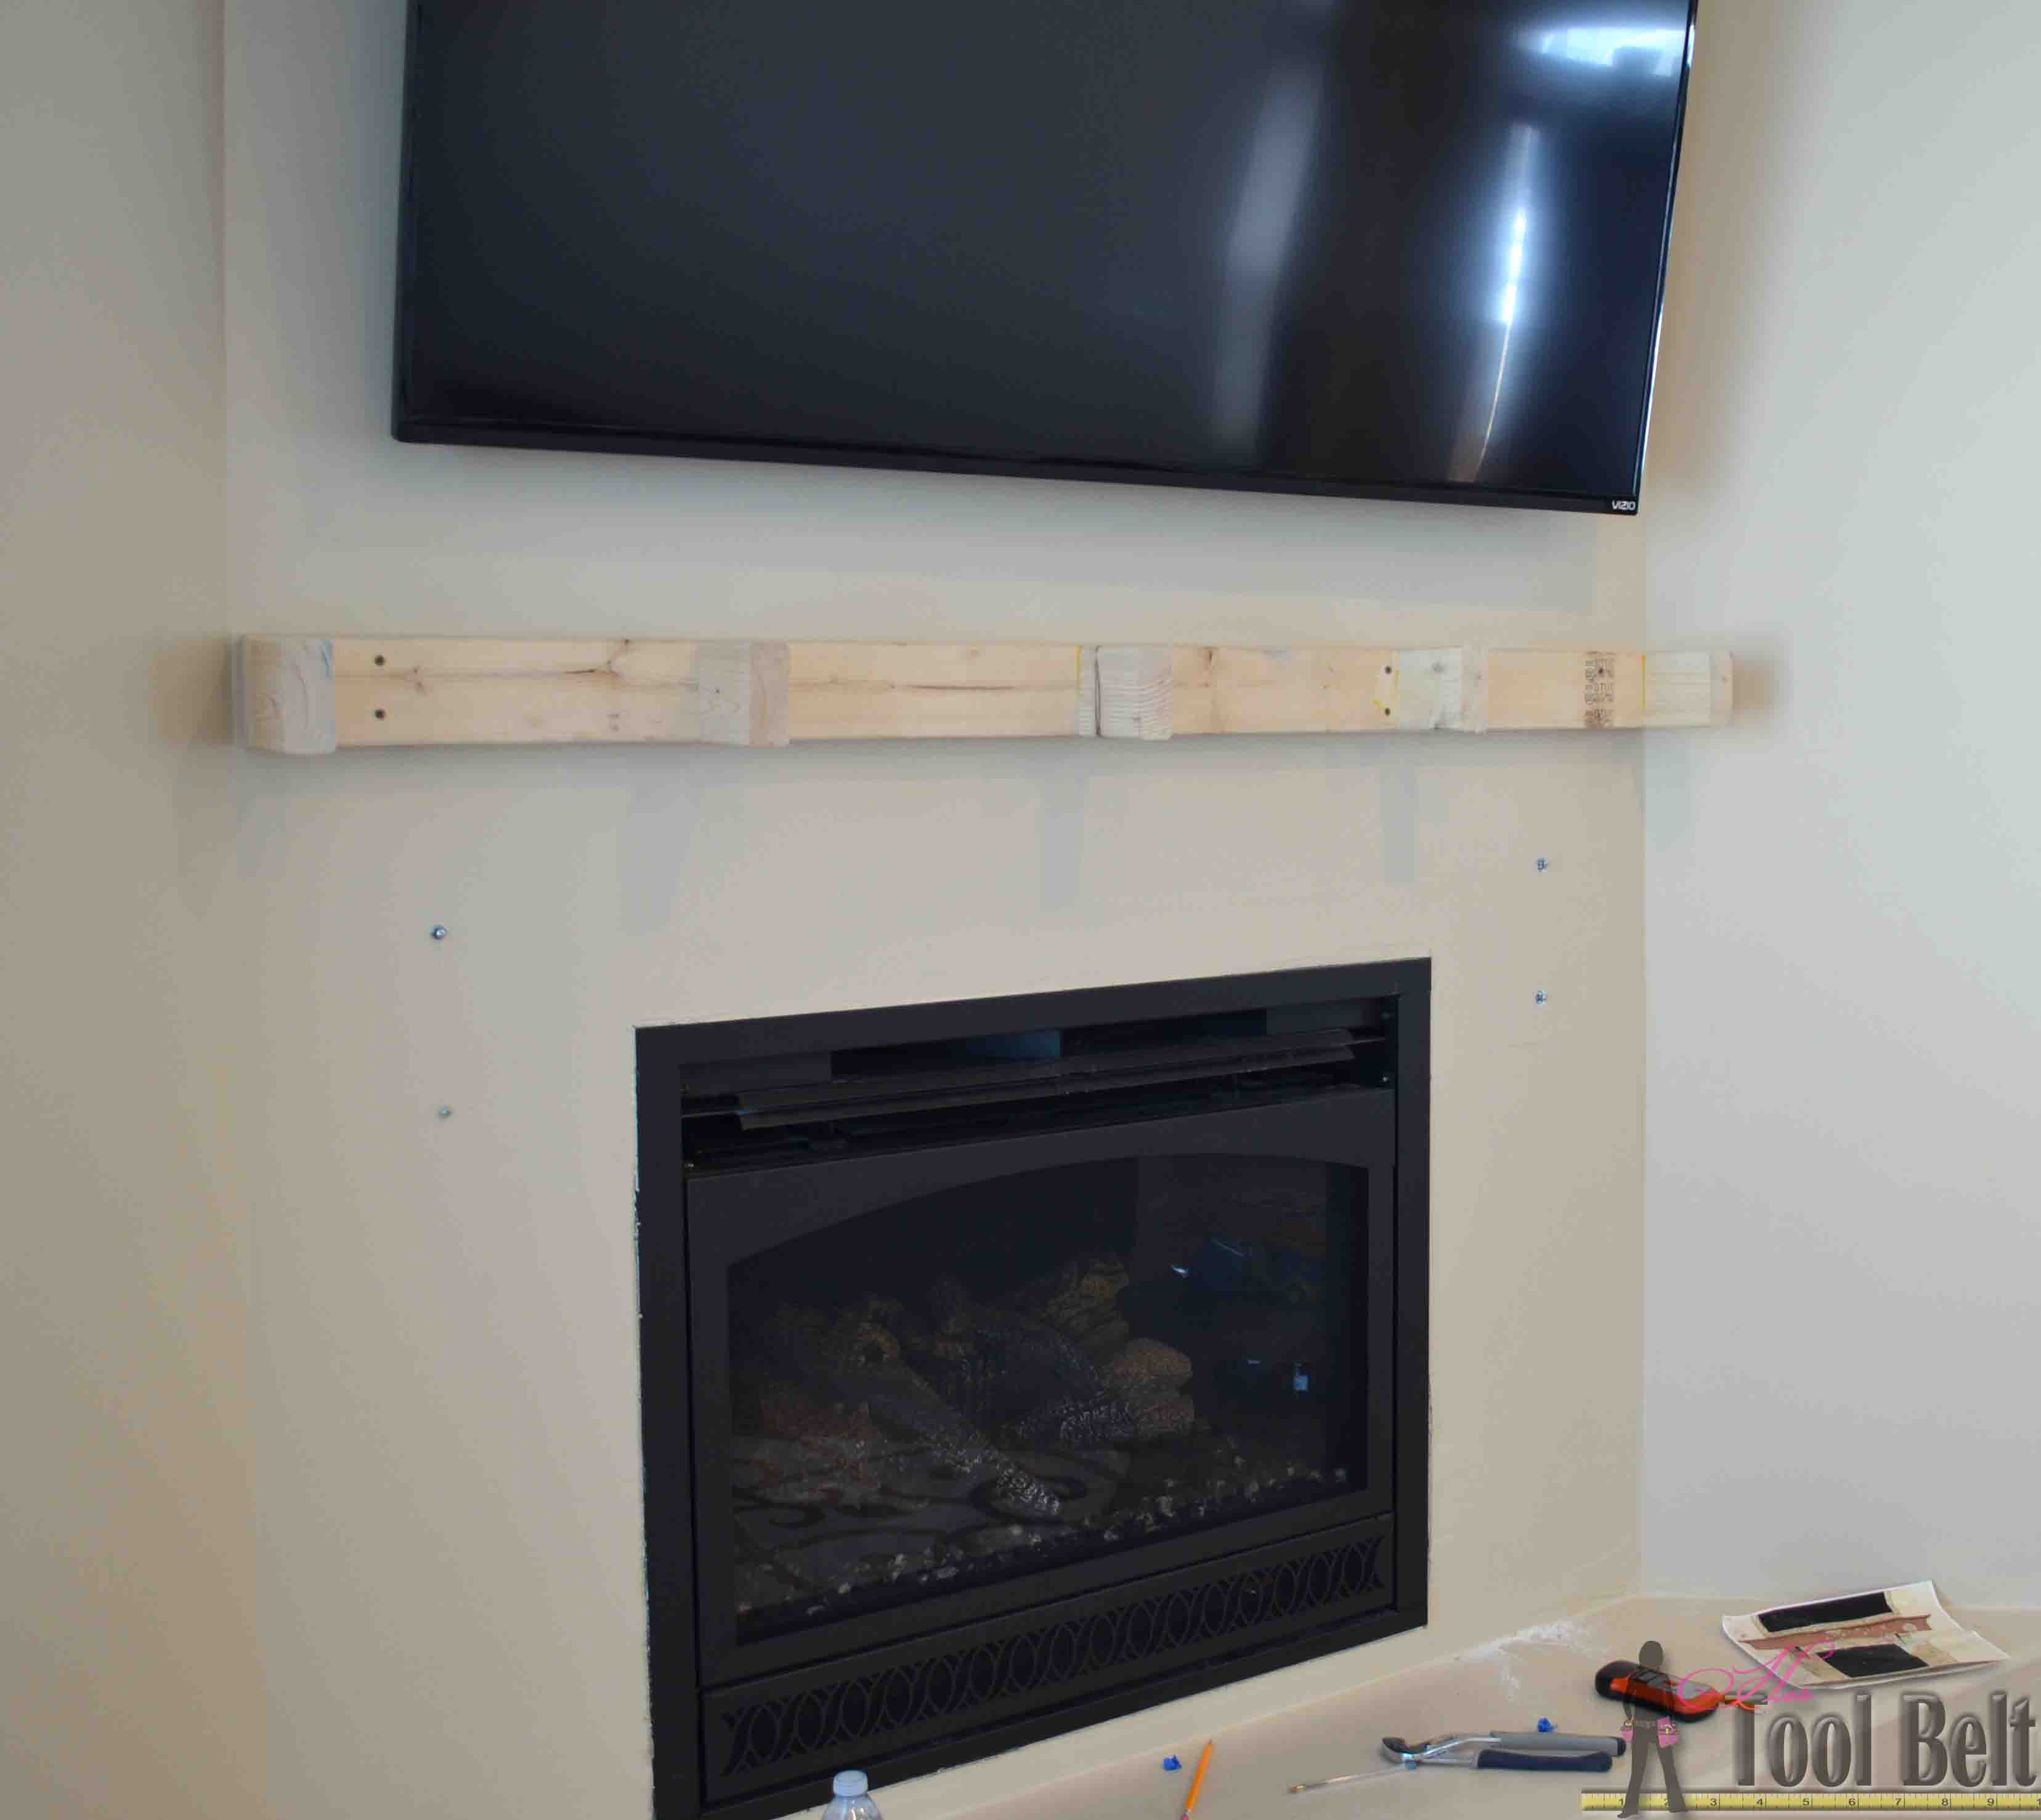 Best ideas about DIY Mantel Shelf
. Save or Pin DIY Fireplace Mantel Shelf Her Tool Belt Now.